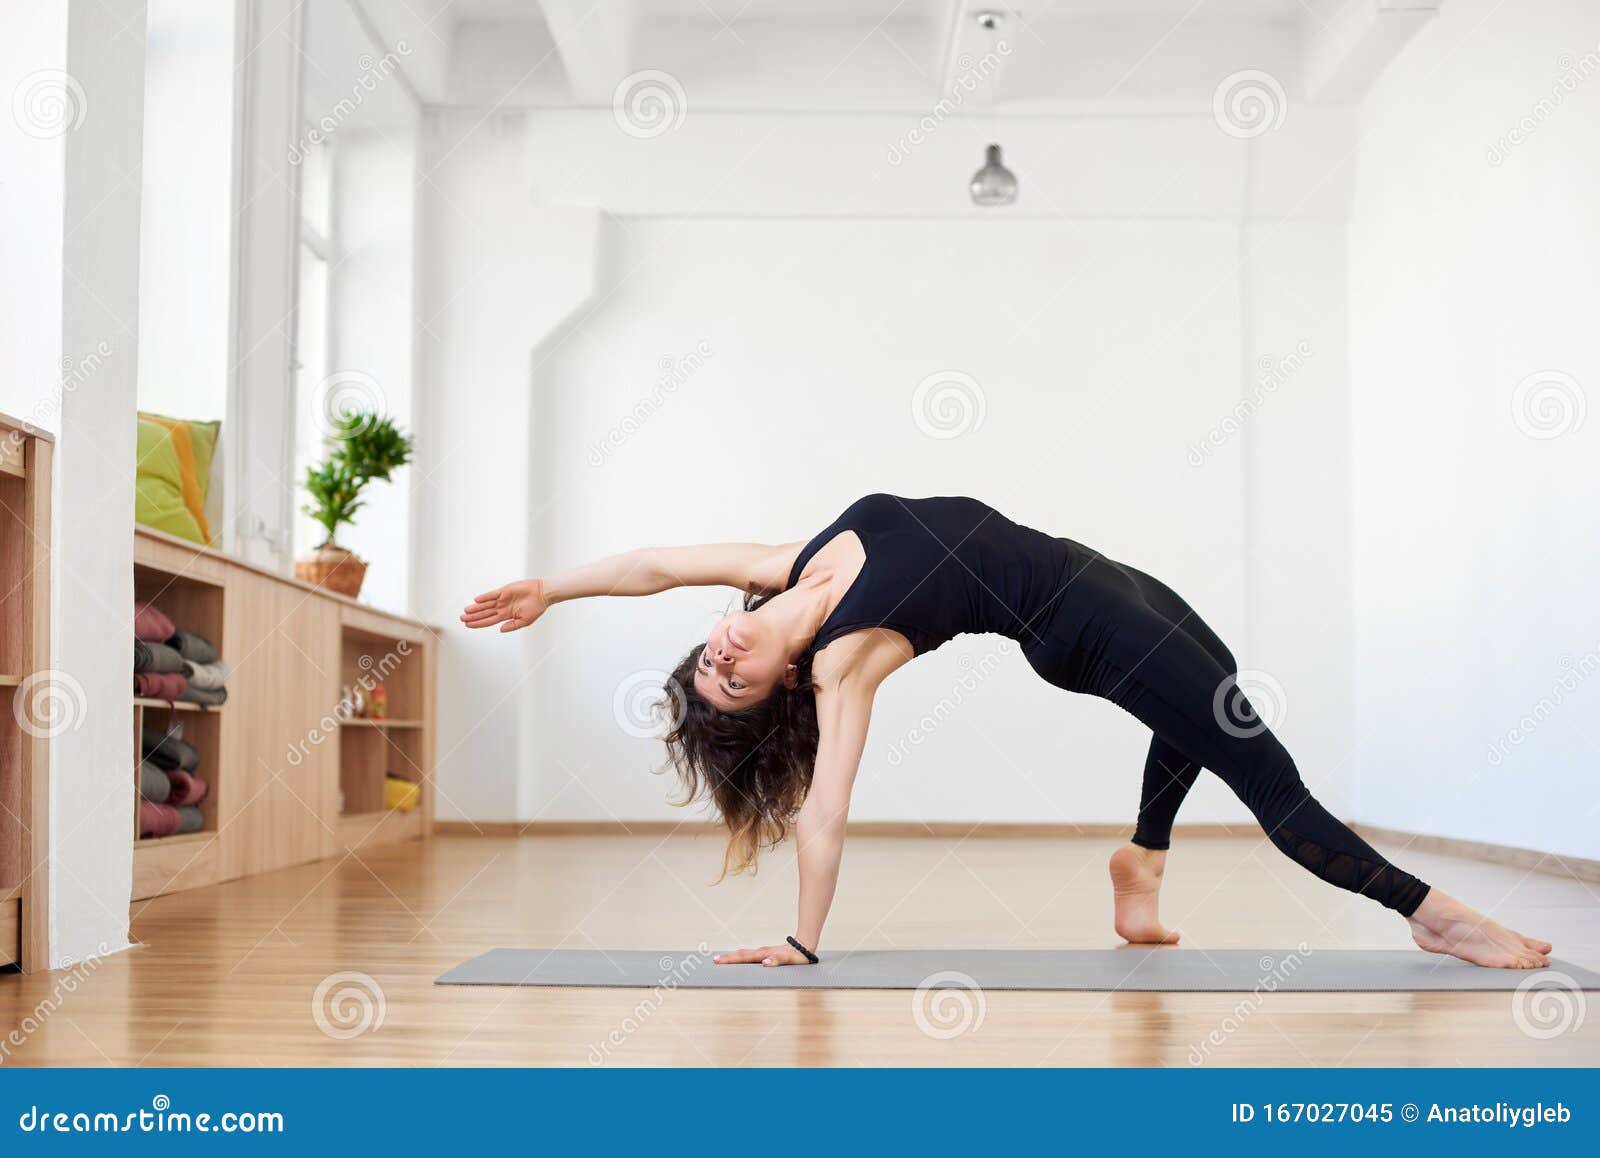 Fit Sporty Flexible Girl Doing Backbend Stretching Exercise. Camatkarasana  Wild Thing or Flip-the-Dog Pose. Copy Space Stock Image - Image of  background, fitness: 167027045